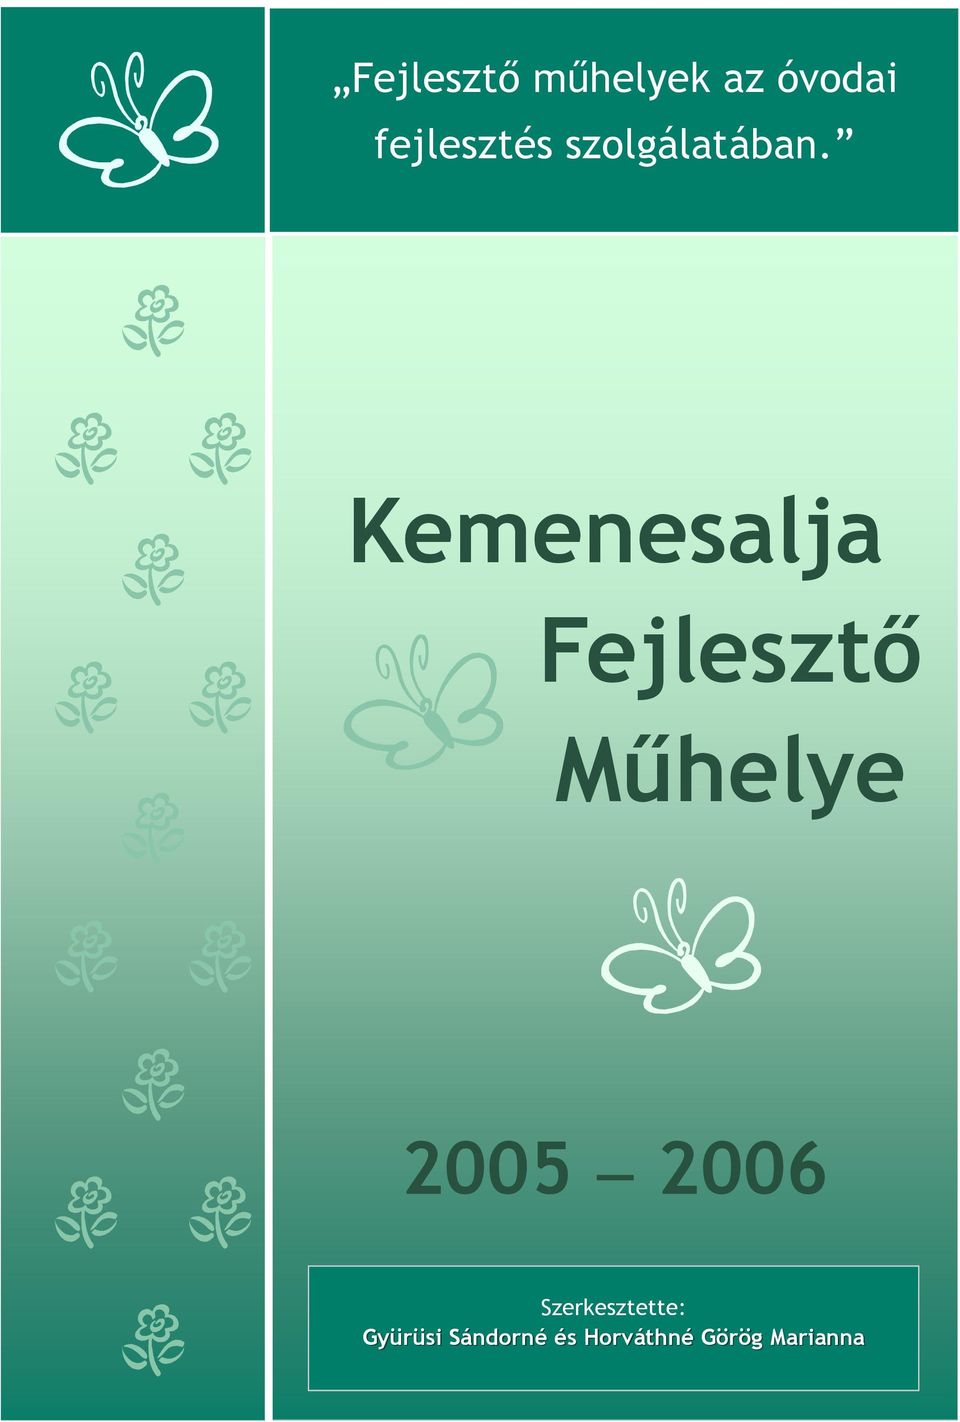 Kemenesalja Fejlesztı Mőhelye 2005